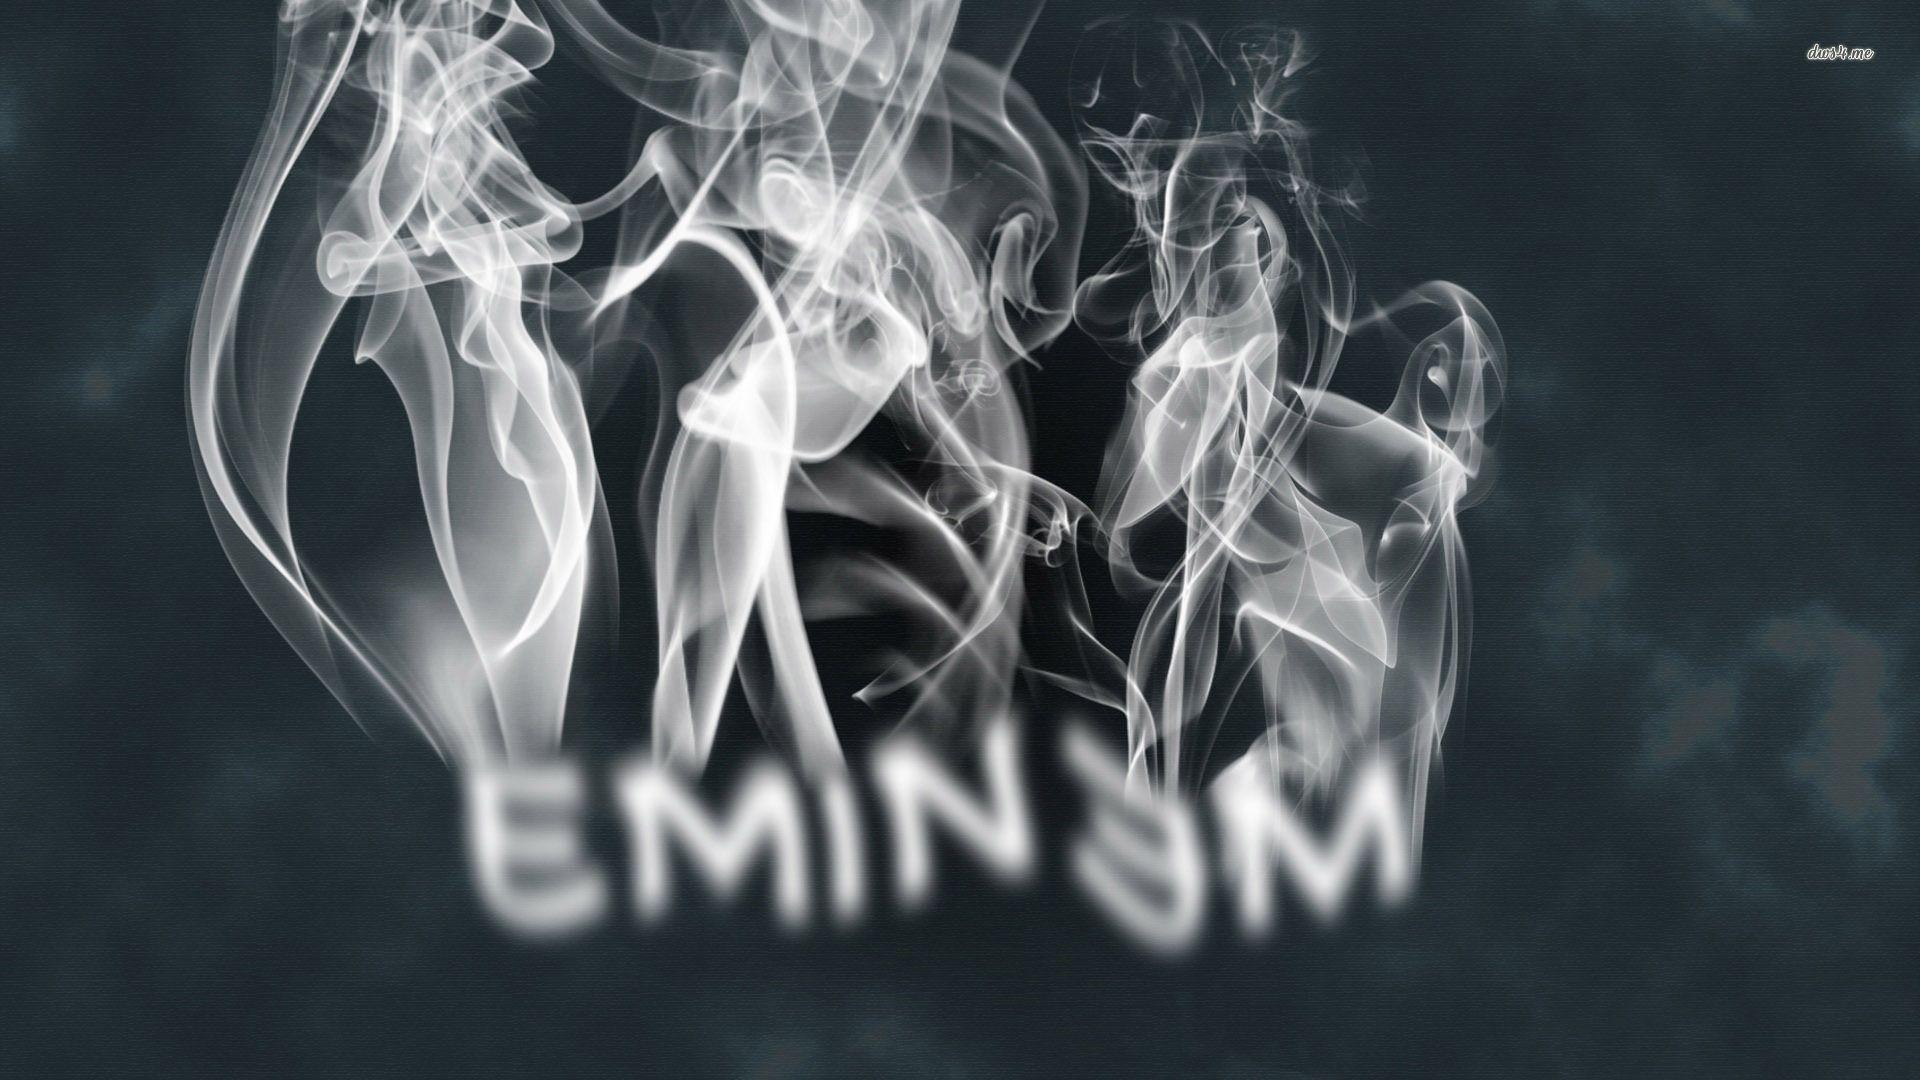 Eminem HD Wallpaper and Background. HD Wallpaper